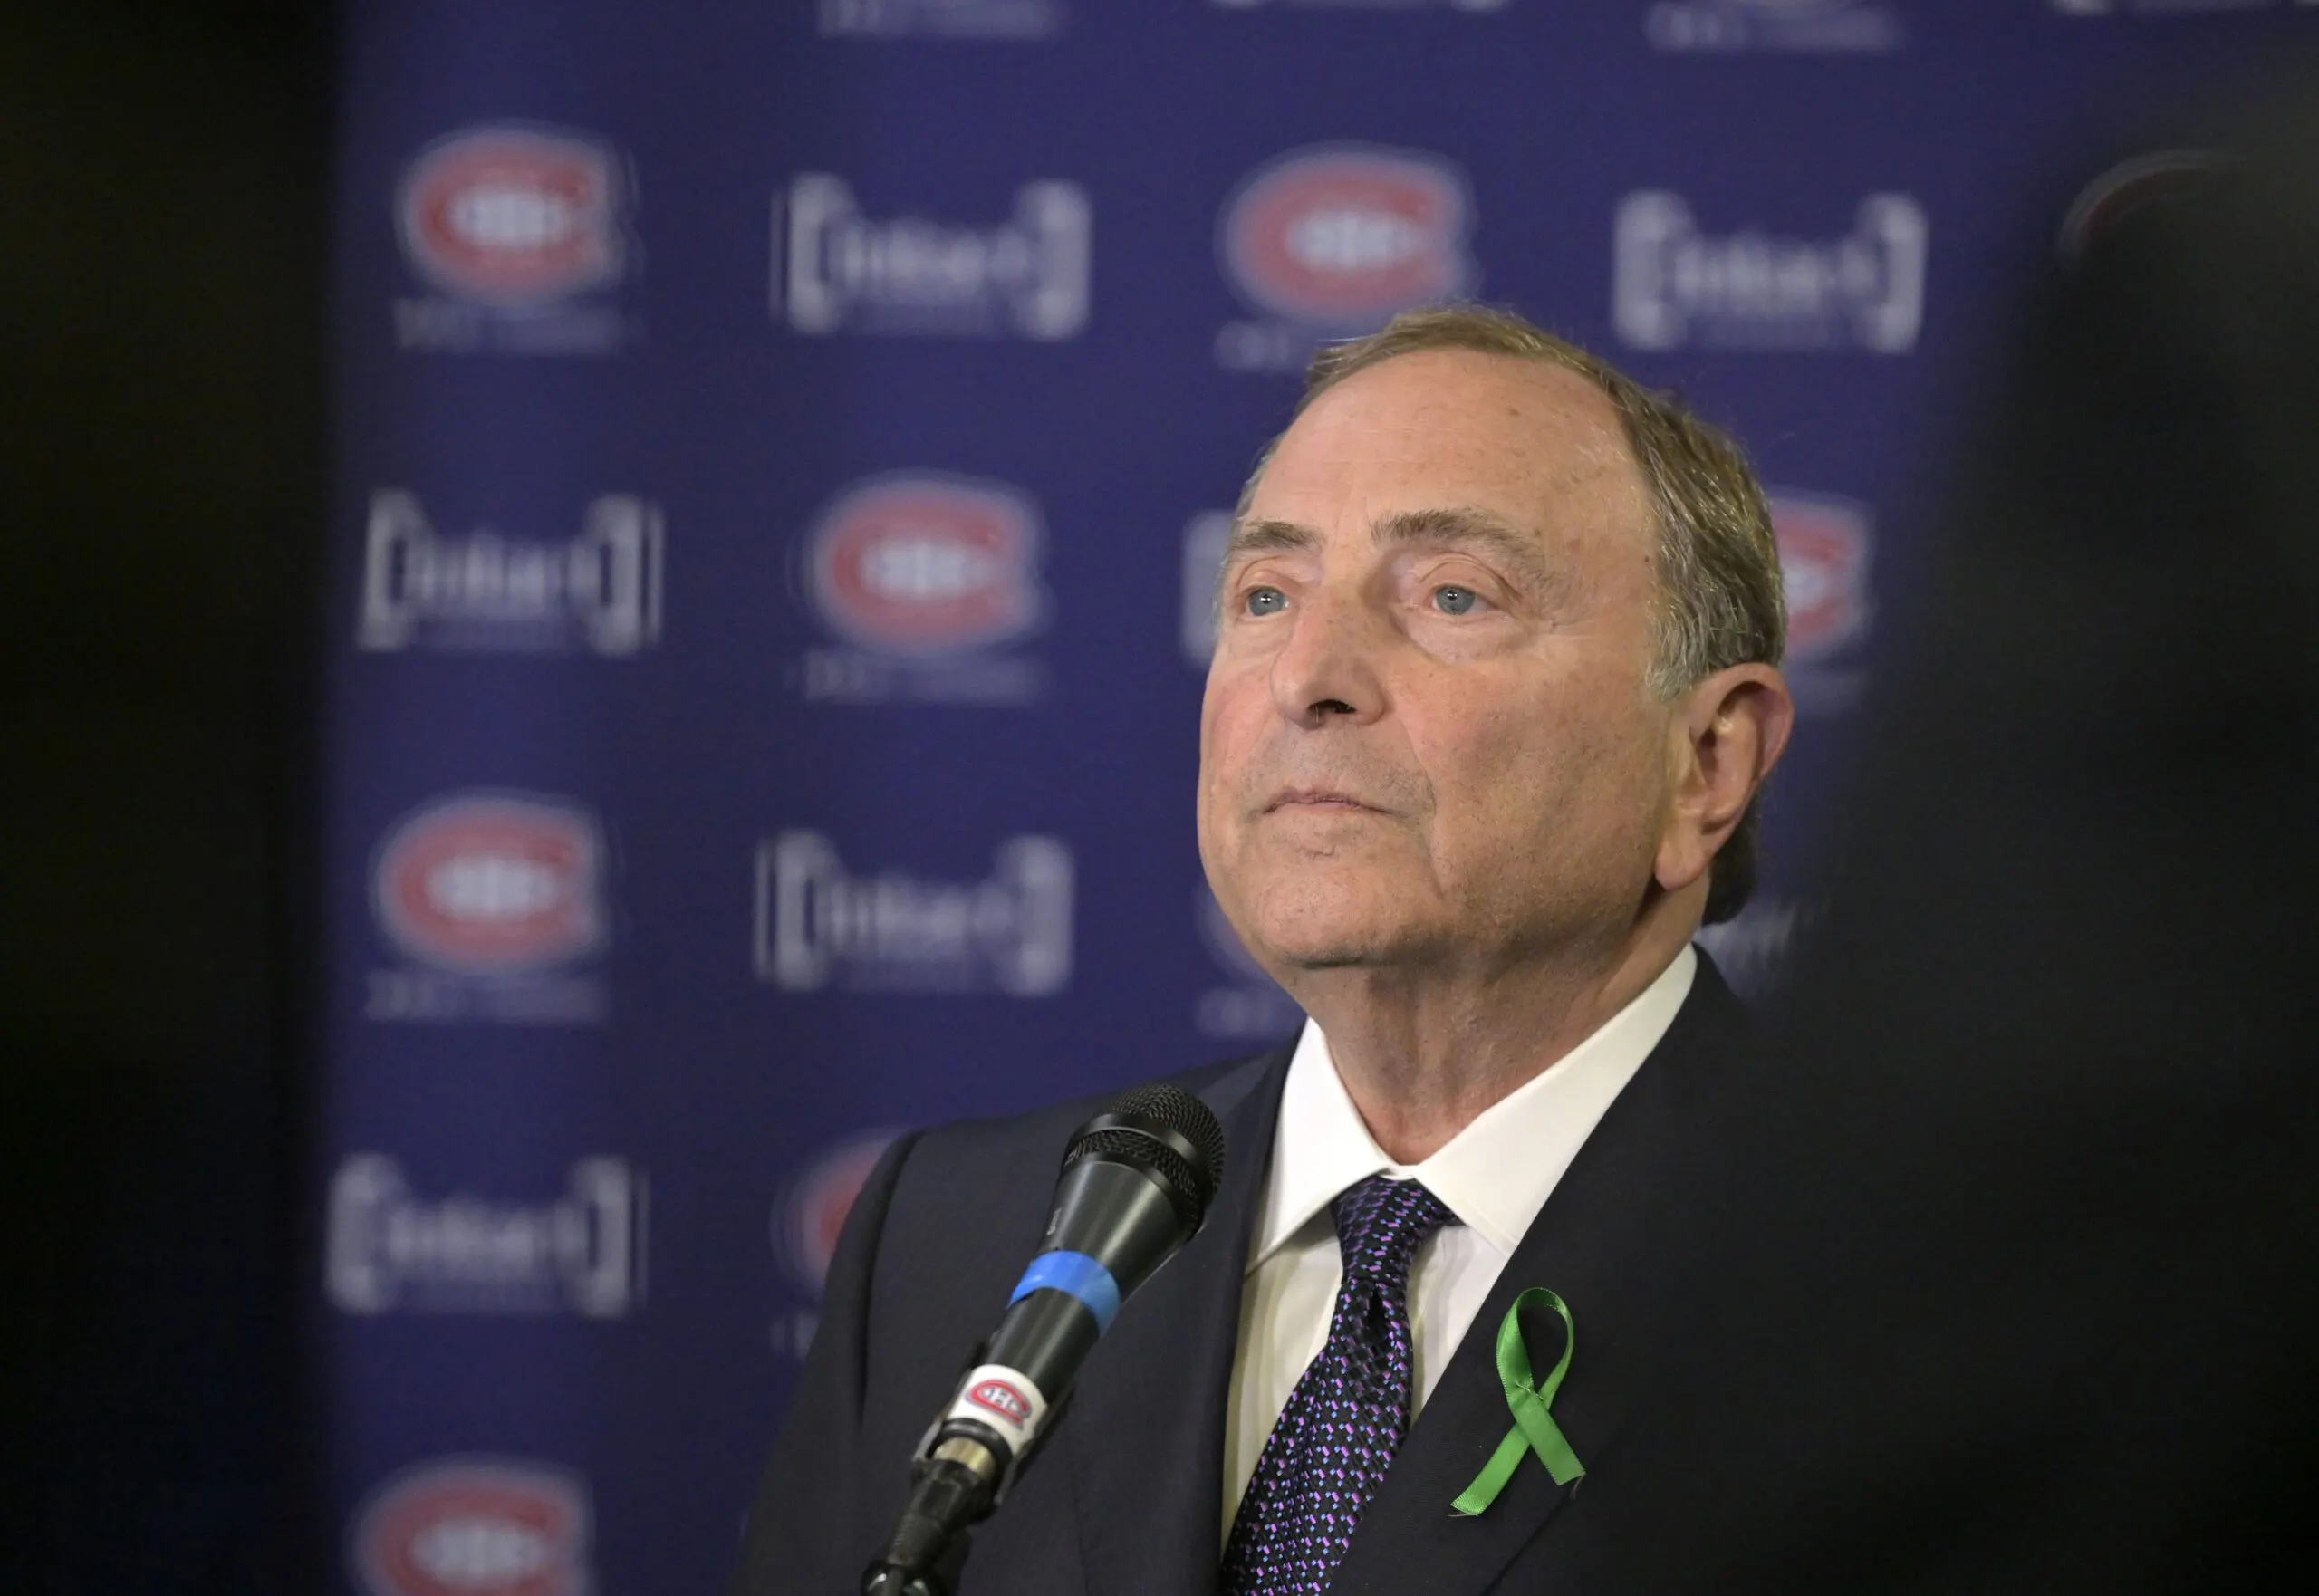 NHL commissioner Gary Bettman again denies link between hockey and CTE